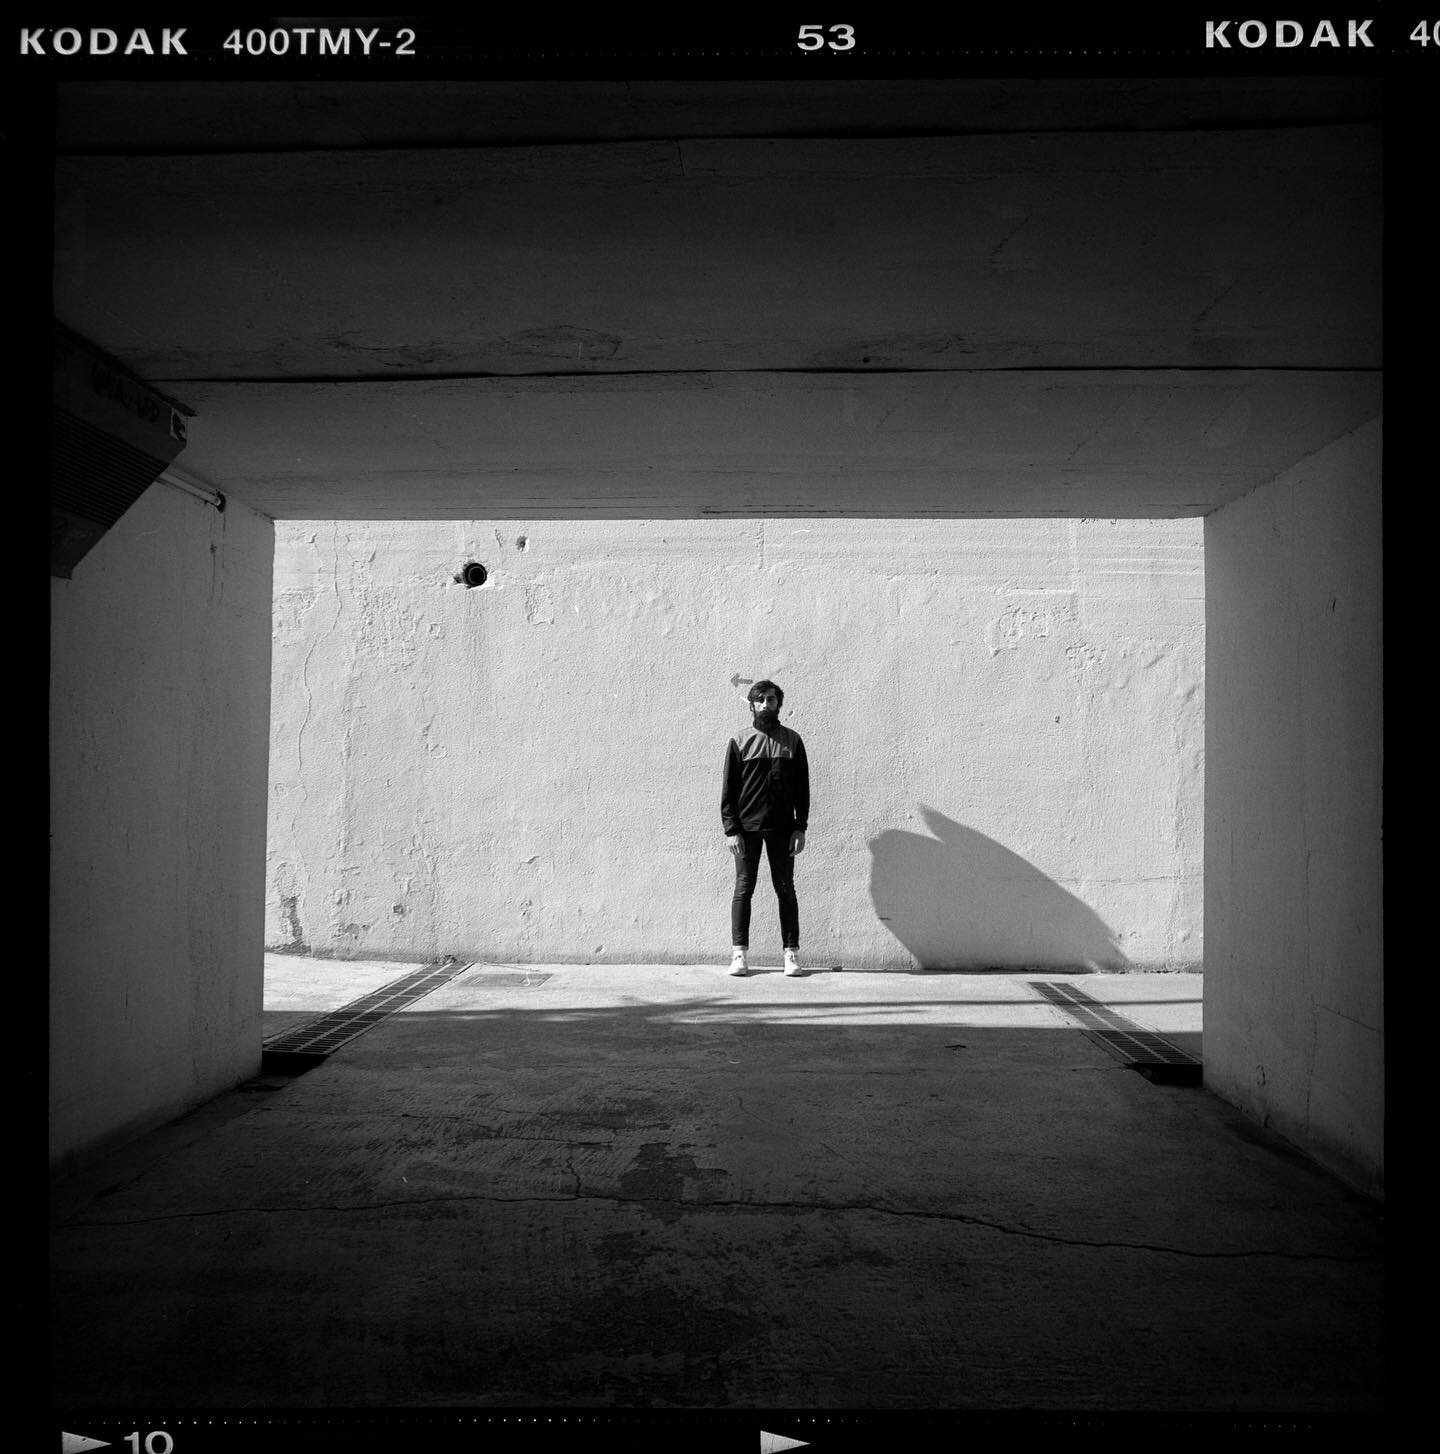 Me by Markus Guhl 

#analog #mediumformat #kodak #portrait #barcelona #travelphotography #diary #filmphotography #luisbarreirophotography @kodak @markus.guhl